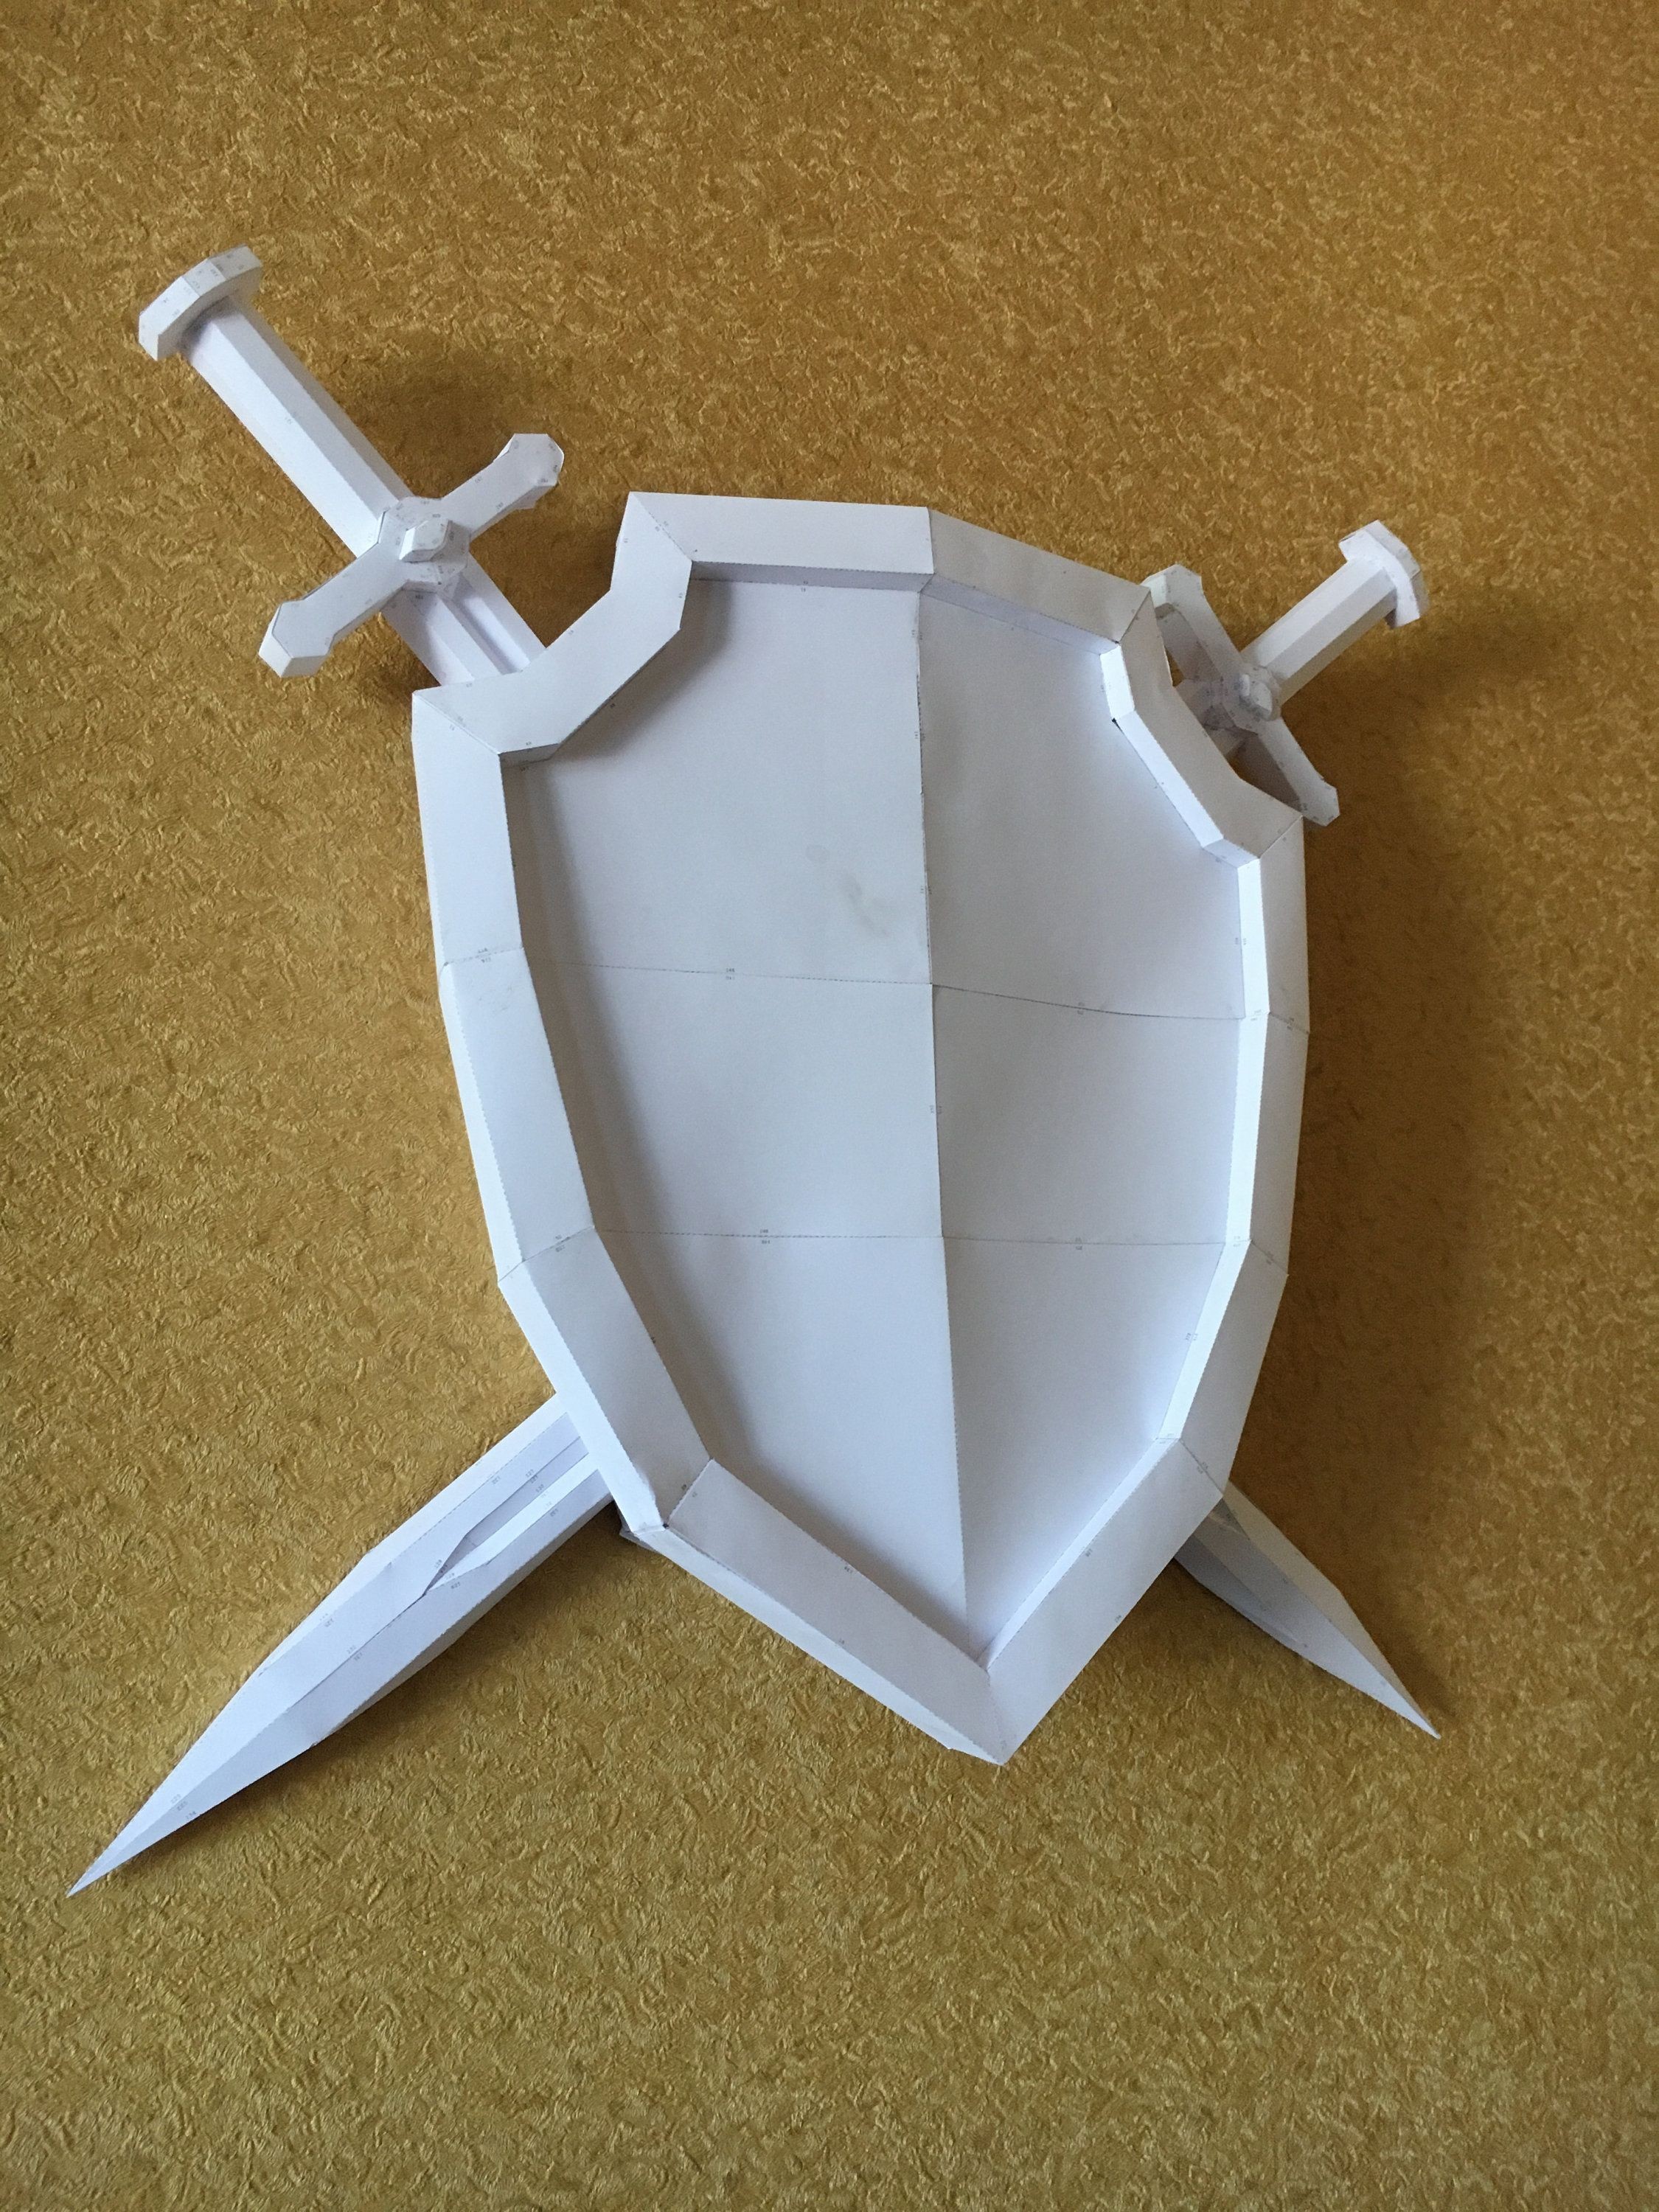 Gun Papercraft Sword Shield Diy Papercraft Model ÐÑÐ¼Ð°Ð¶Ð½ÑÐµ Ð¸Ð·Ð´ÐµÐ Ð¸Ñ